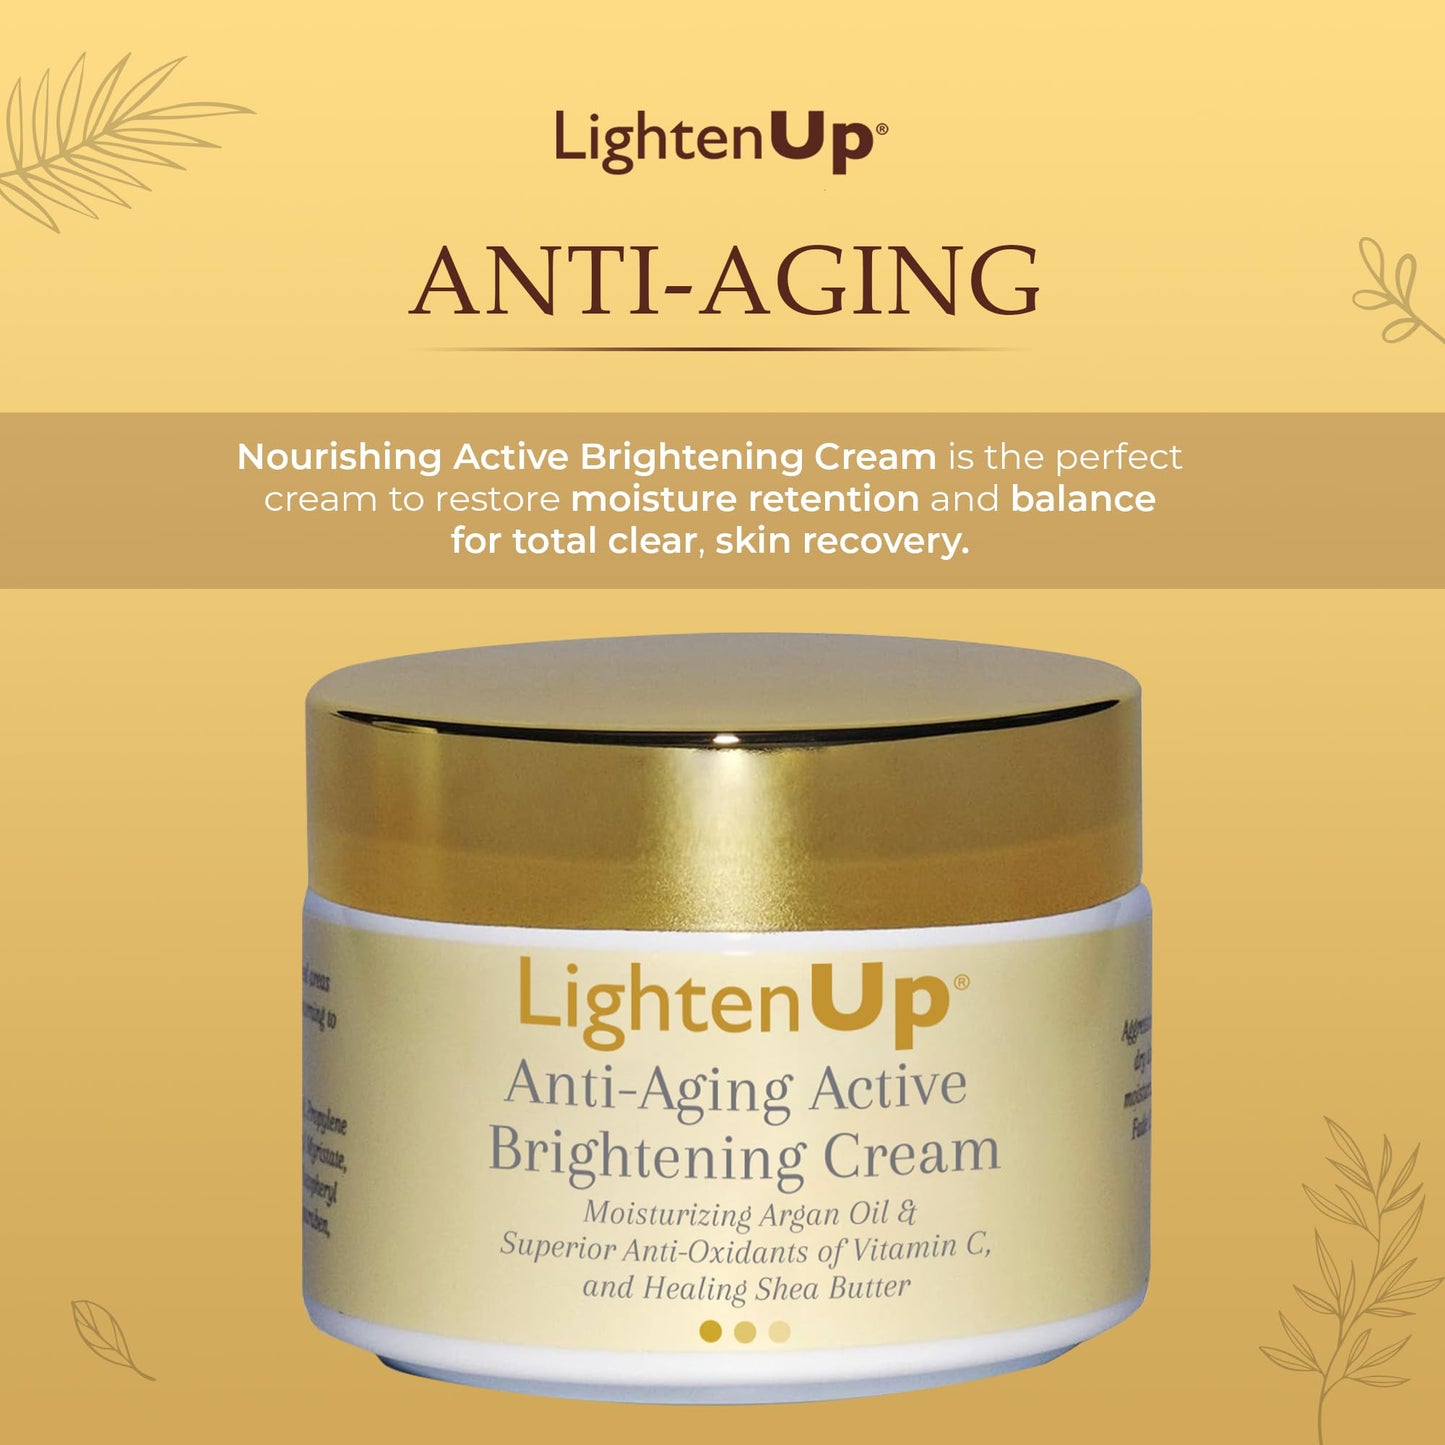 LightenUp Anti-Aging, Skin Brightening Cream - 4.4 fl oz / 100 ml - with Argan Oil and Shea Butter